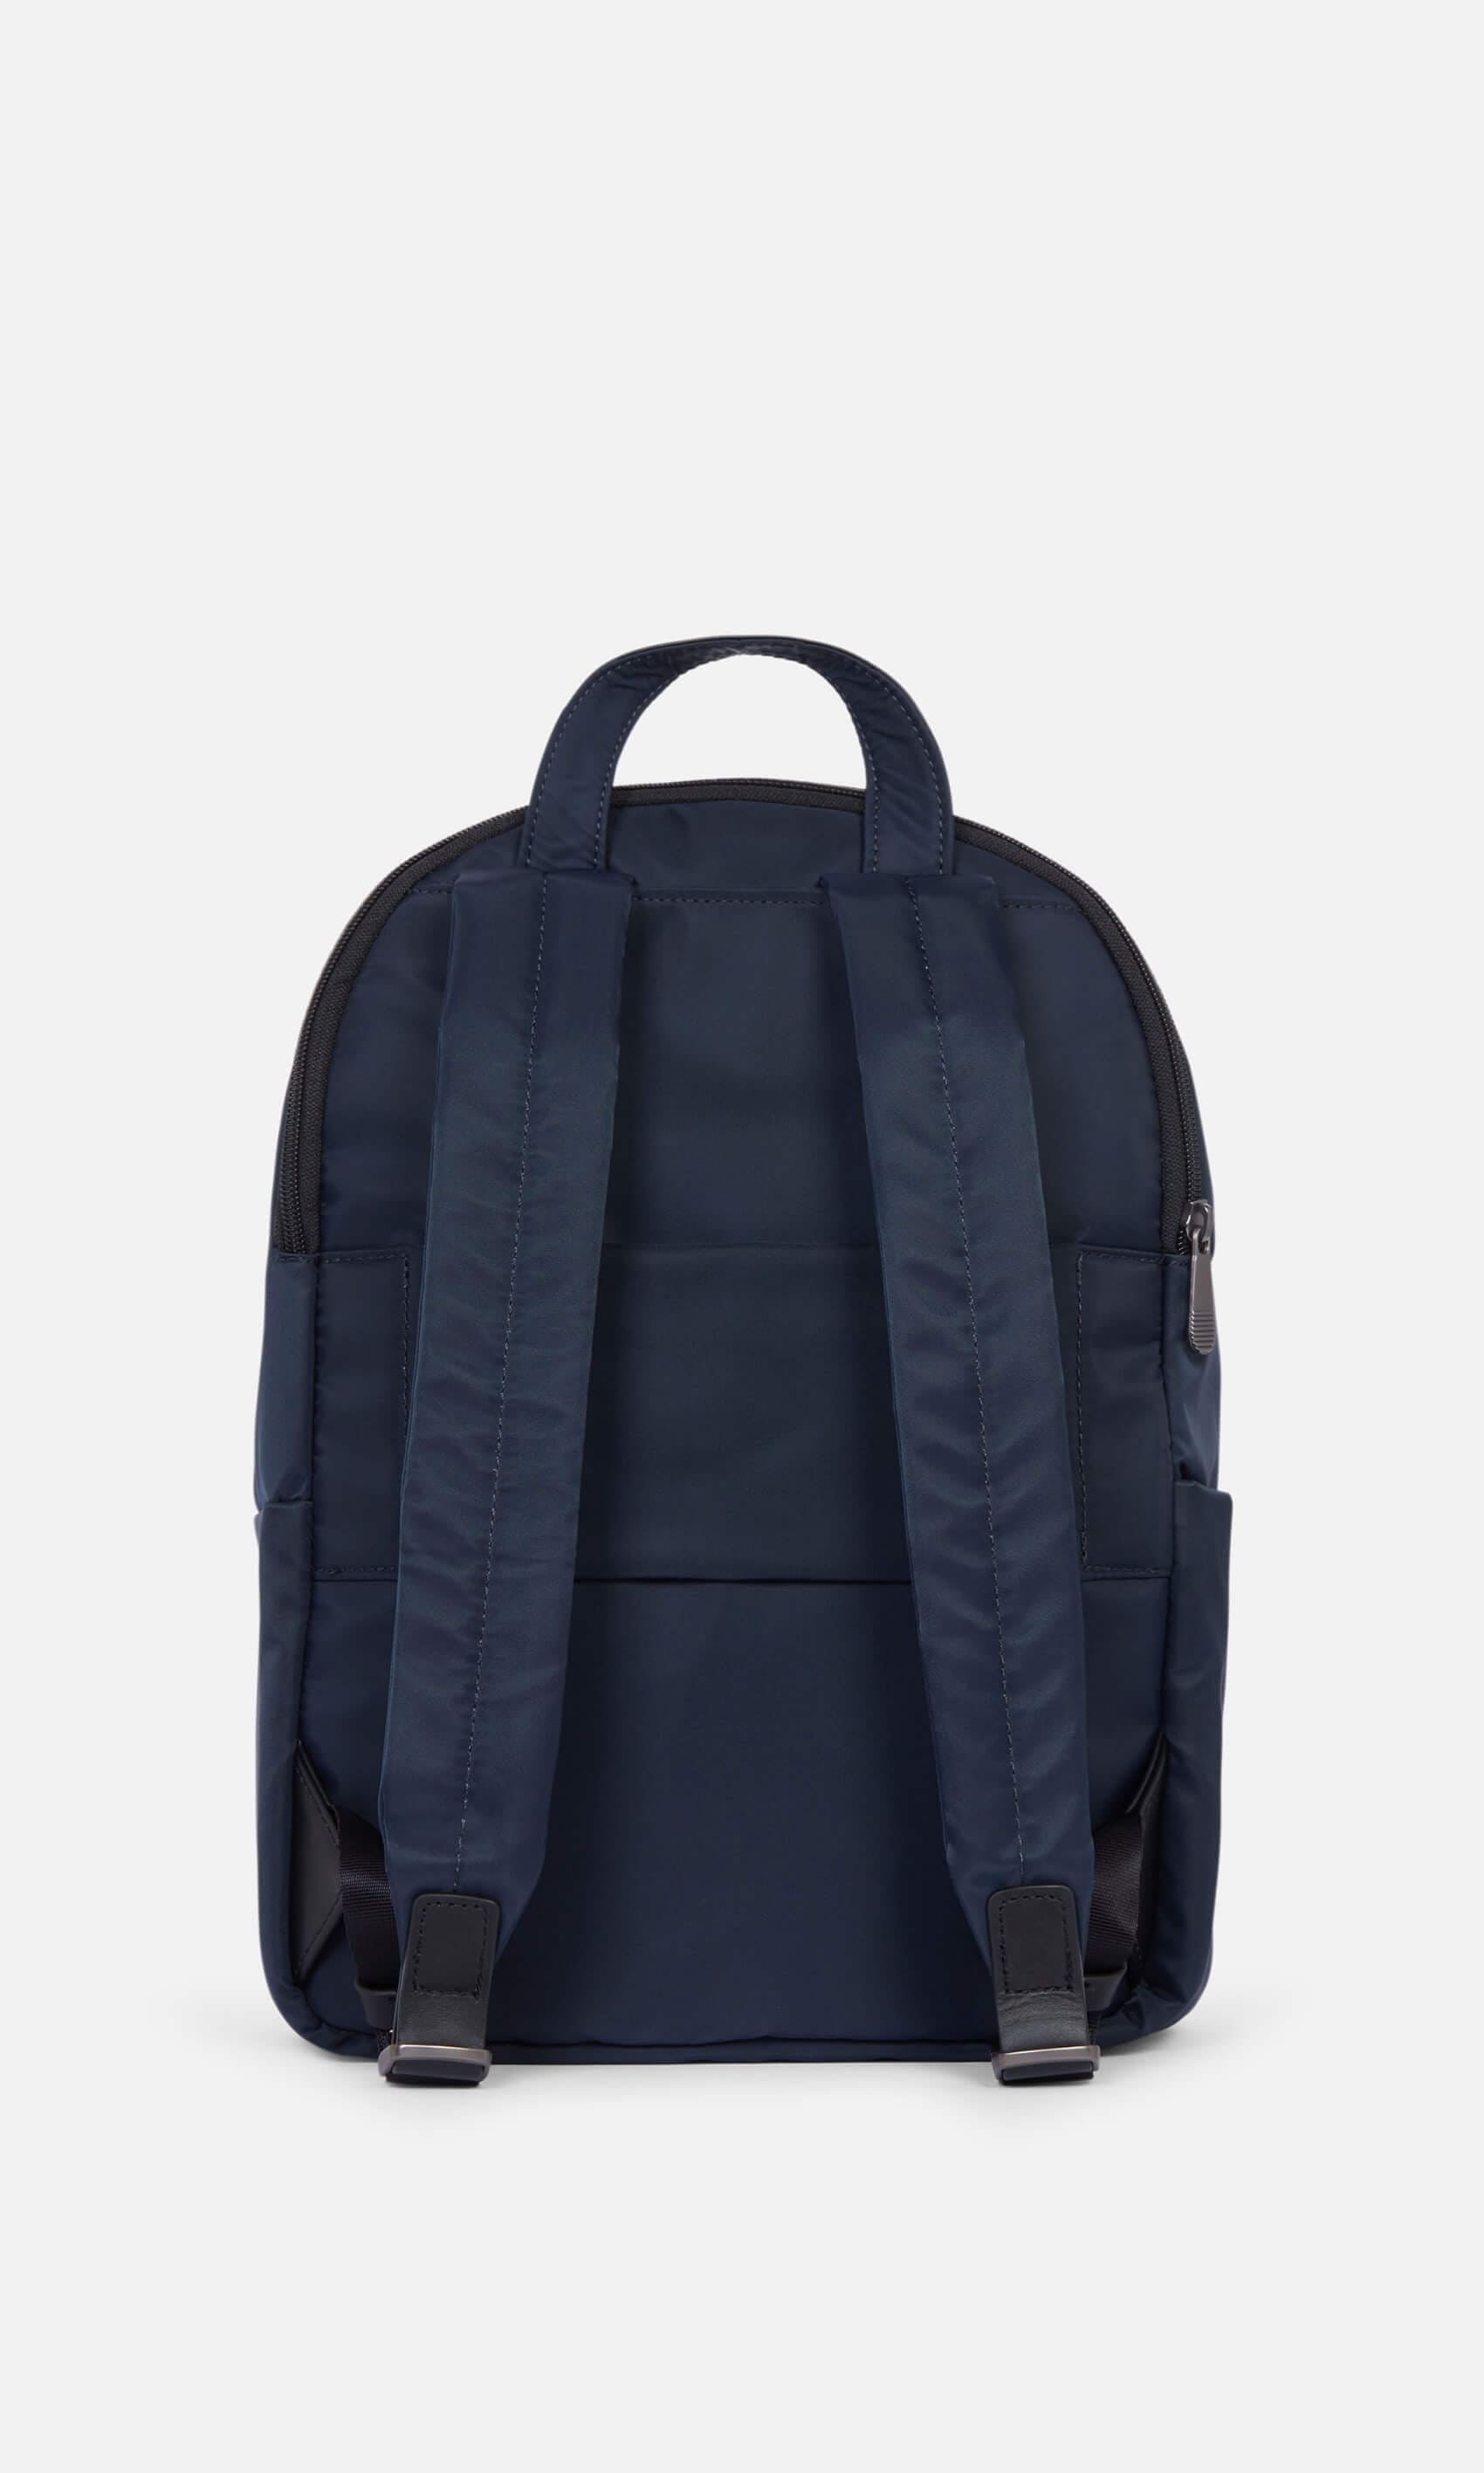 Antler Luggage -  Chelsea daypack in navy - Chelsea Backpack Navy | Travel & Lifestyle Bags | Antler UK